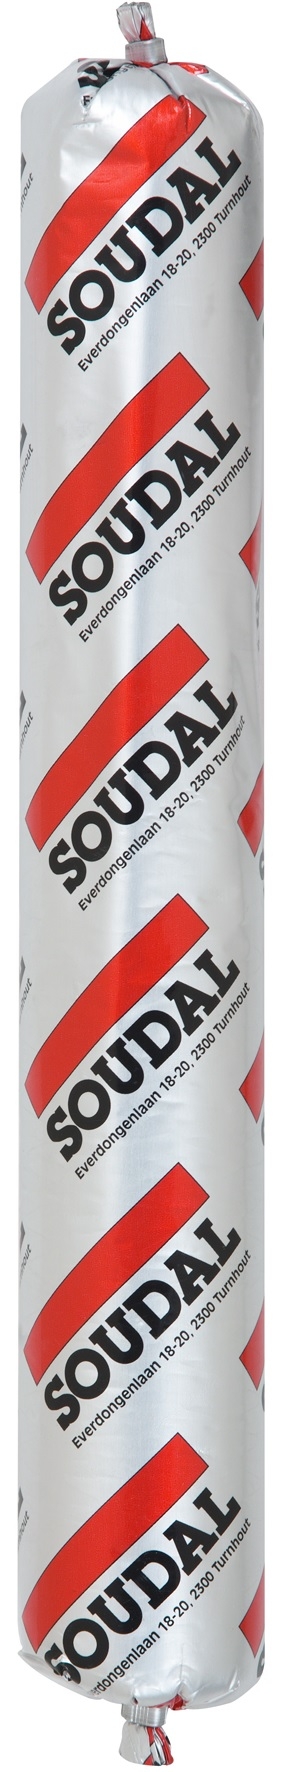 Soudal Soudaseal 215LM  - Creme wit Ral 9001 - 600 ml